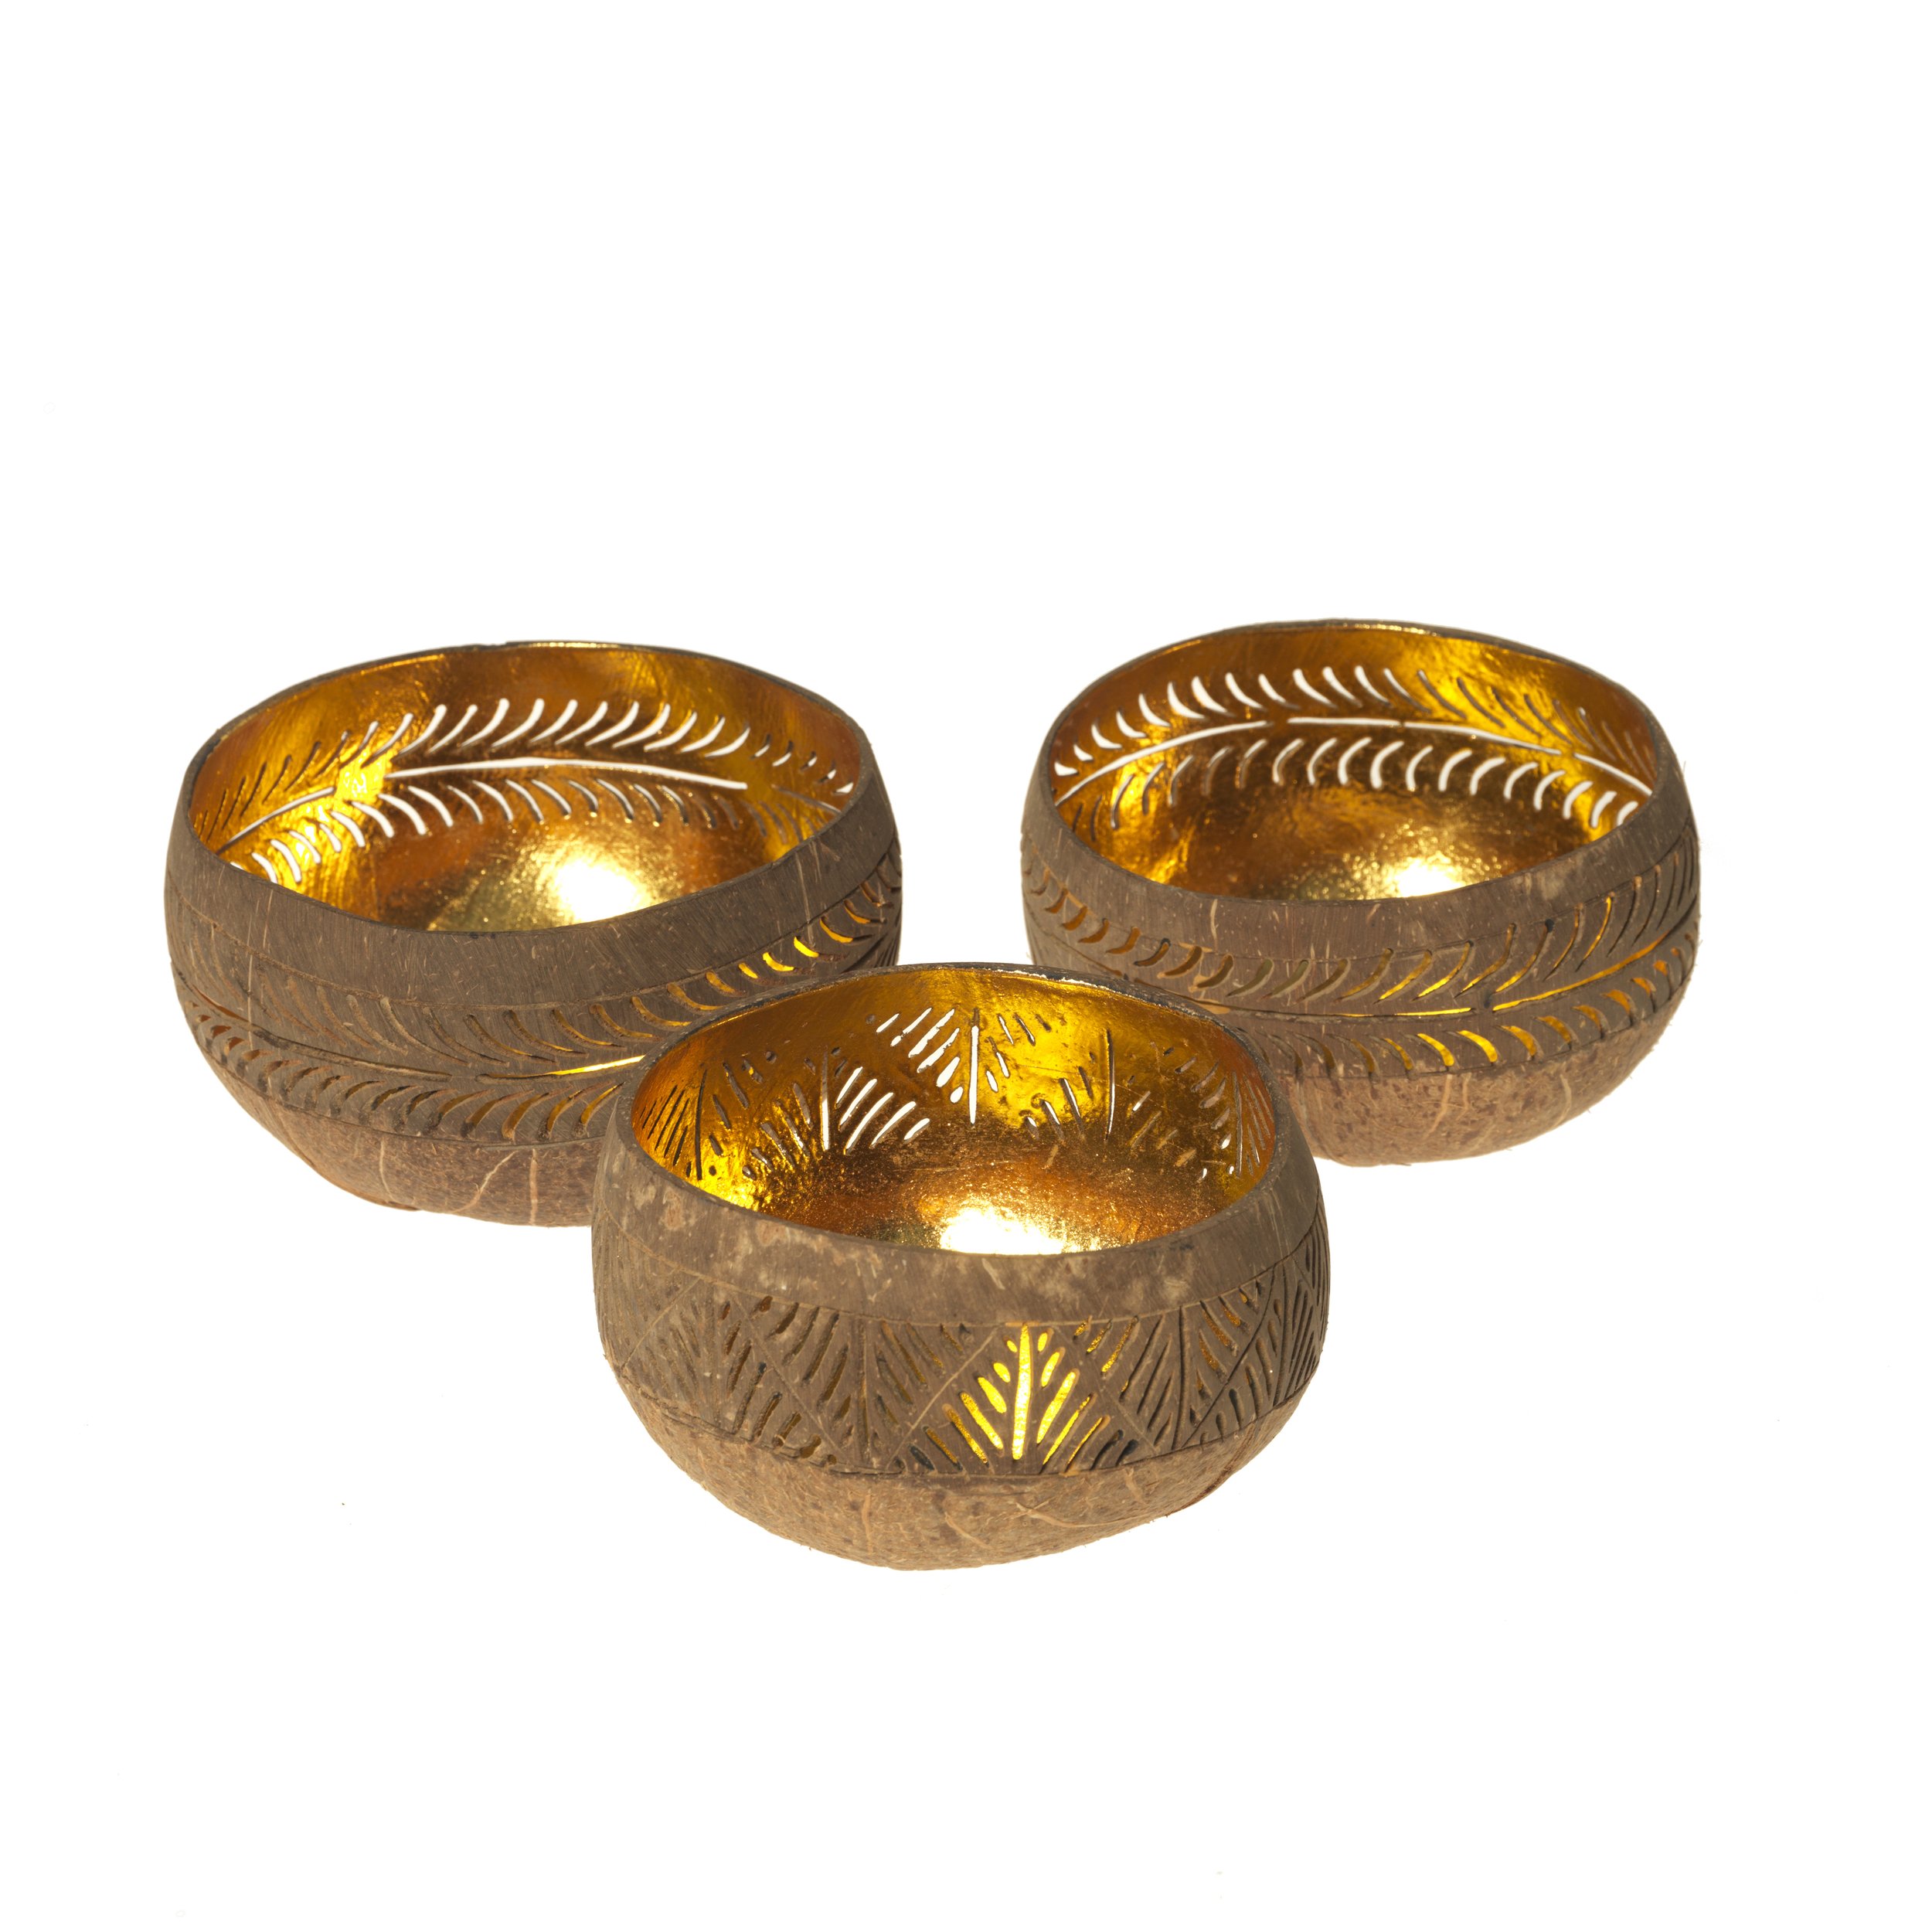 4.SHIMU Carved Coconut Bowl, Gold €34.88